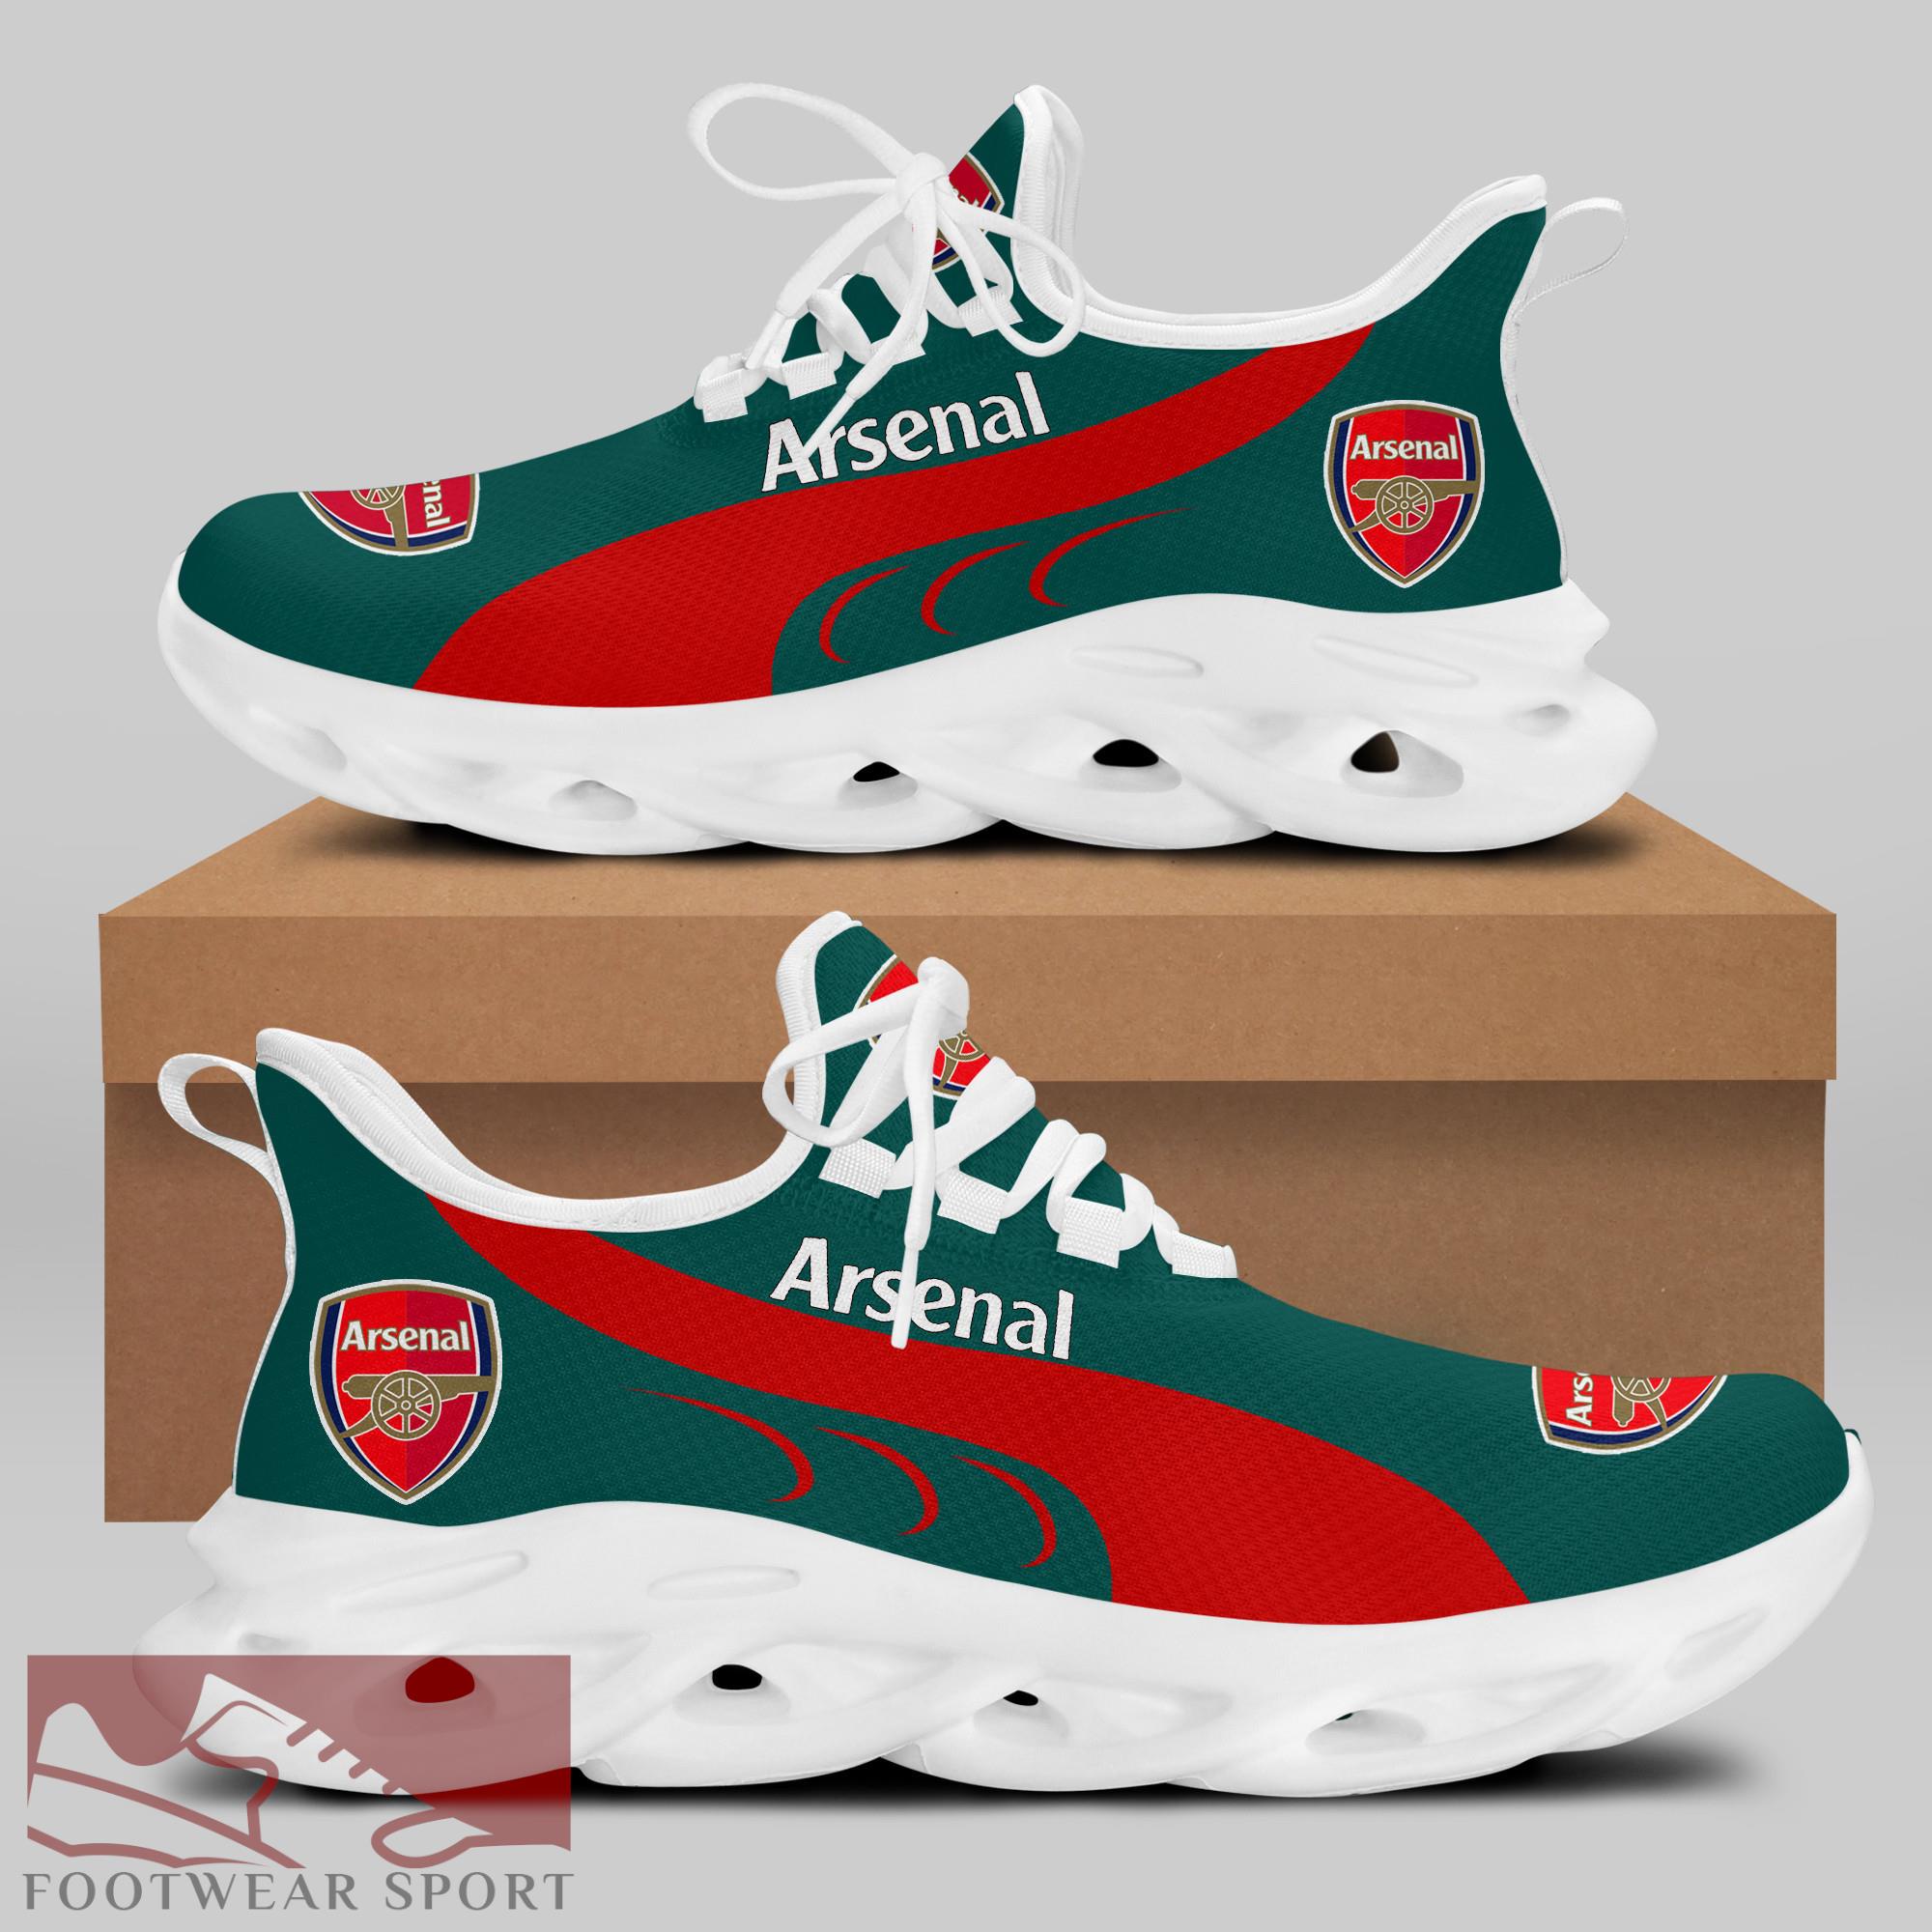 Arsenal Fans EPL Chunky Sneakers Sleek Max Soul Shoes For Men And Women - Arsenal Chunky Sneakers White Black Max Soul Shoes For Men And Women Photo 2